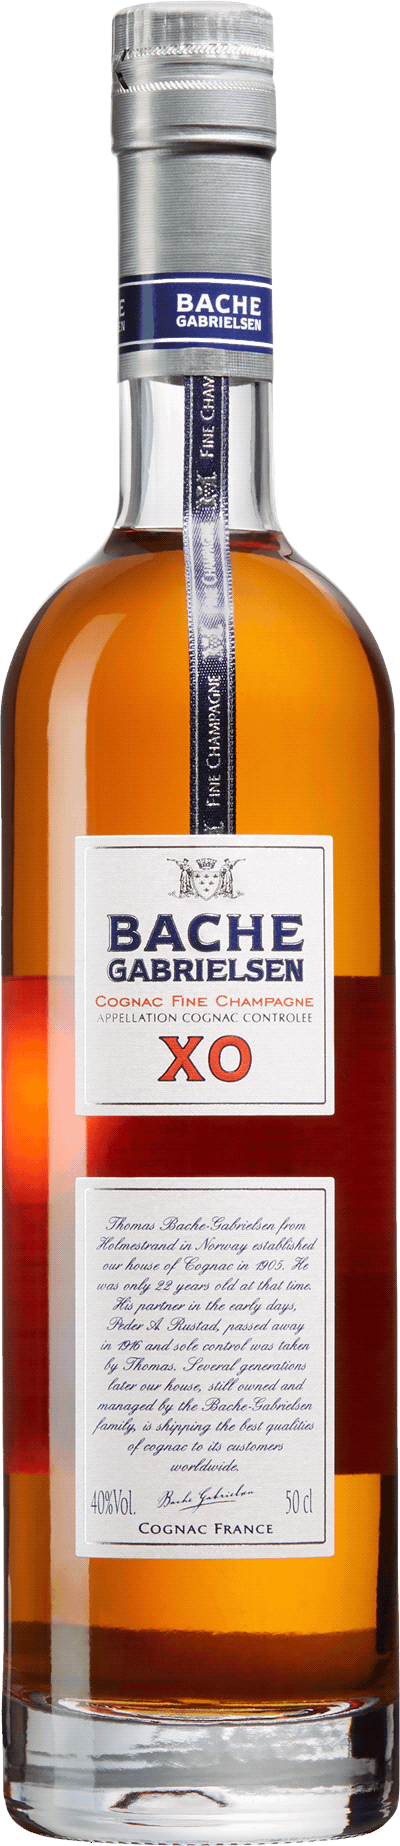 Produktbild för Bache Gabrielsen XO